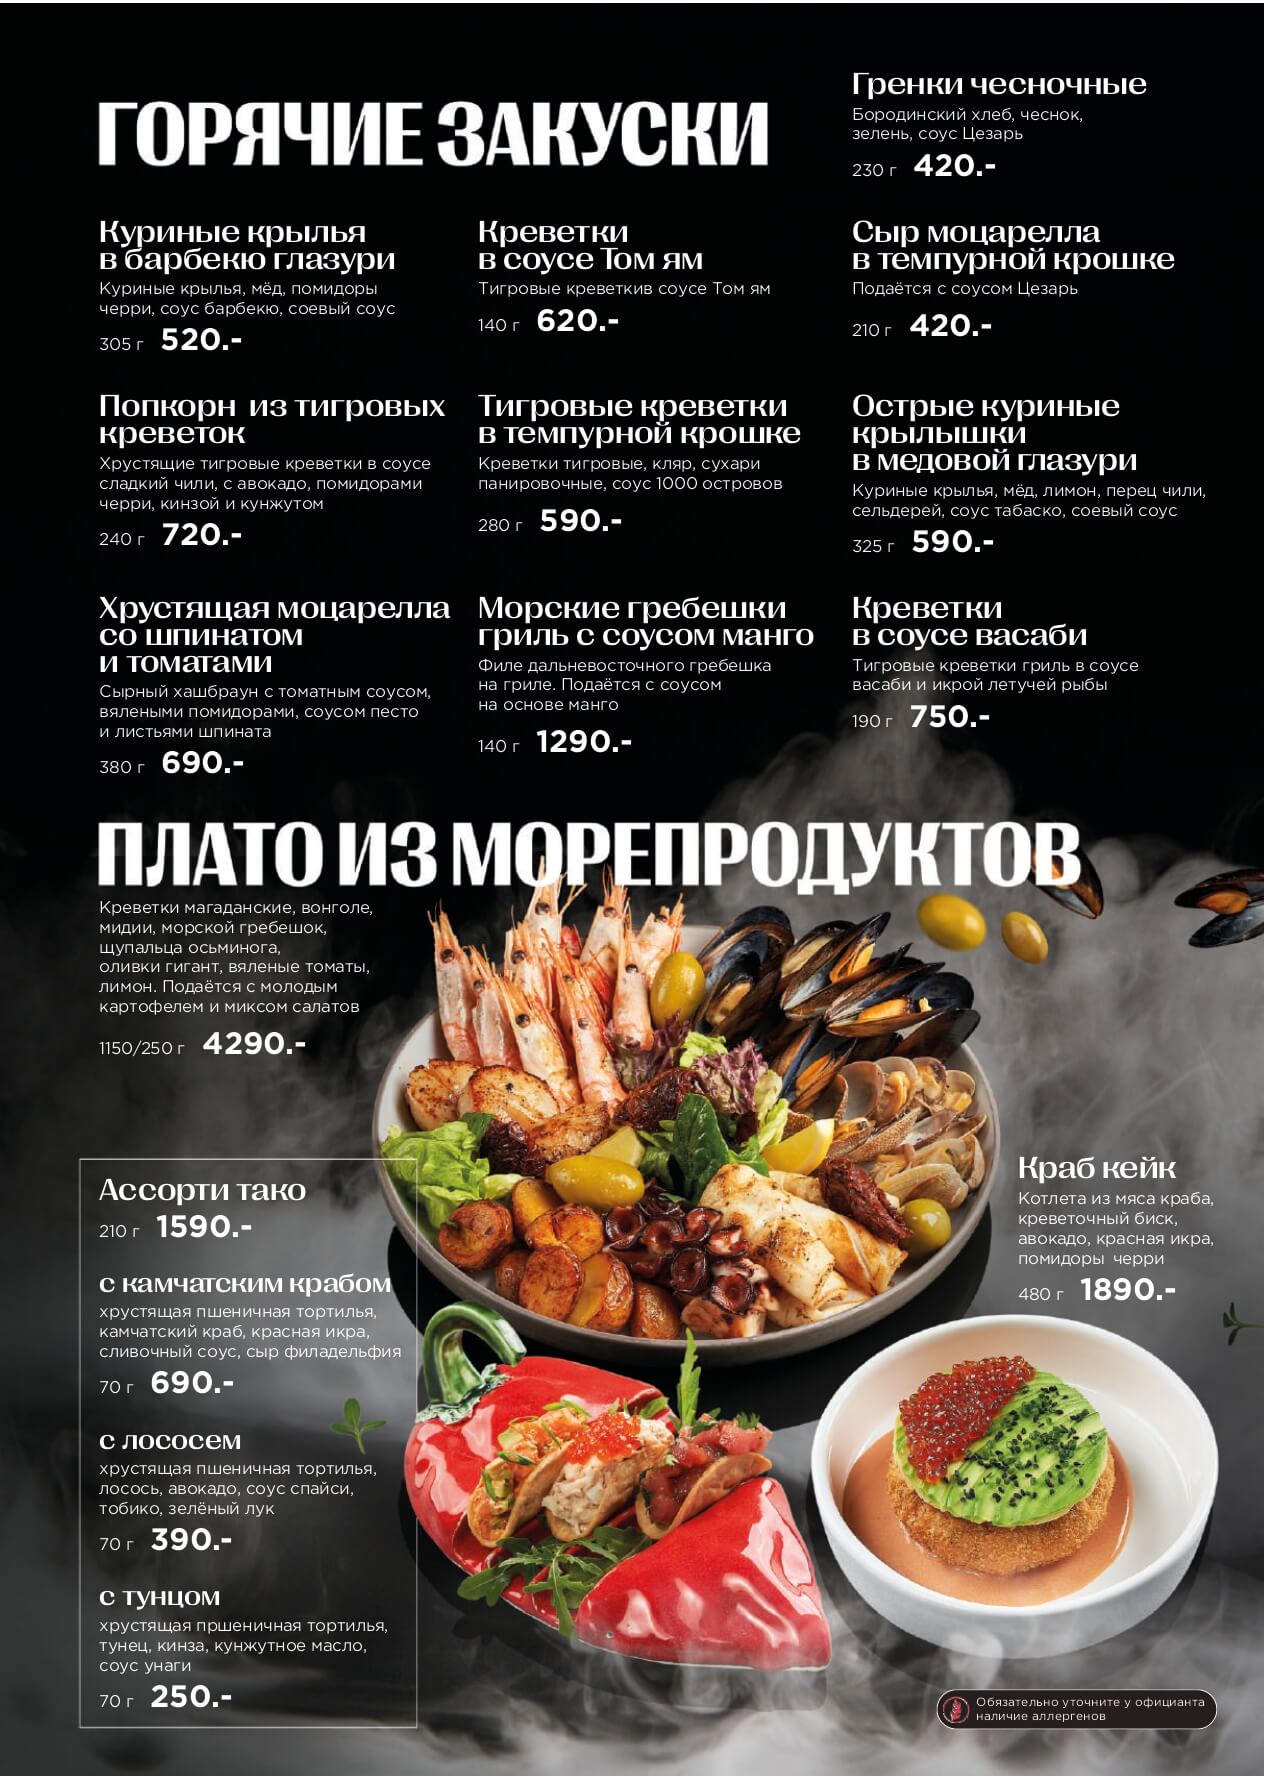 Кухня - menyu kitchen psoled szhatyj page 0009 - Ресторан 1st GALLERY KITCHEN